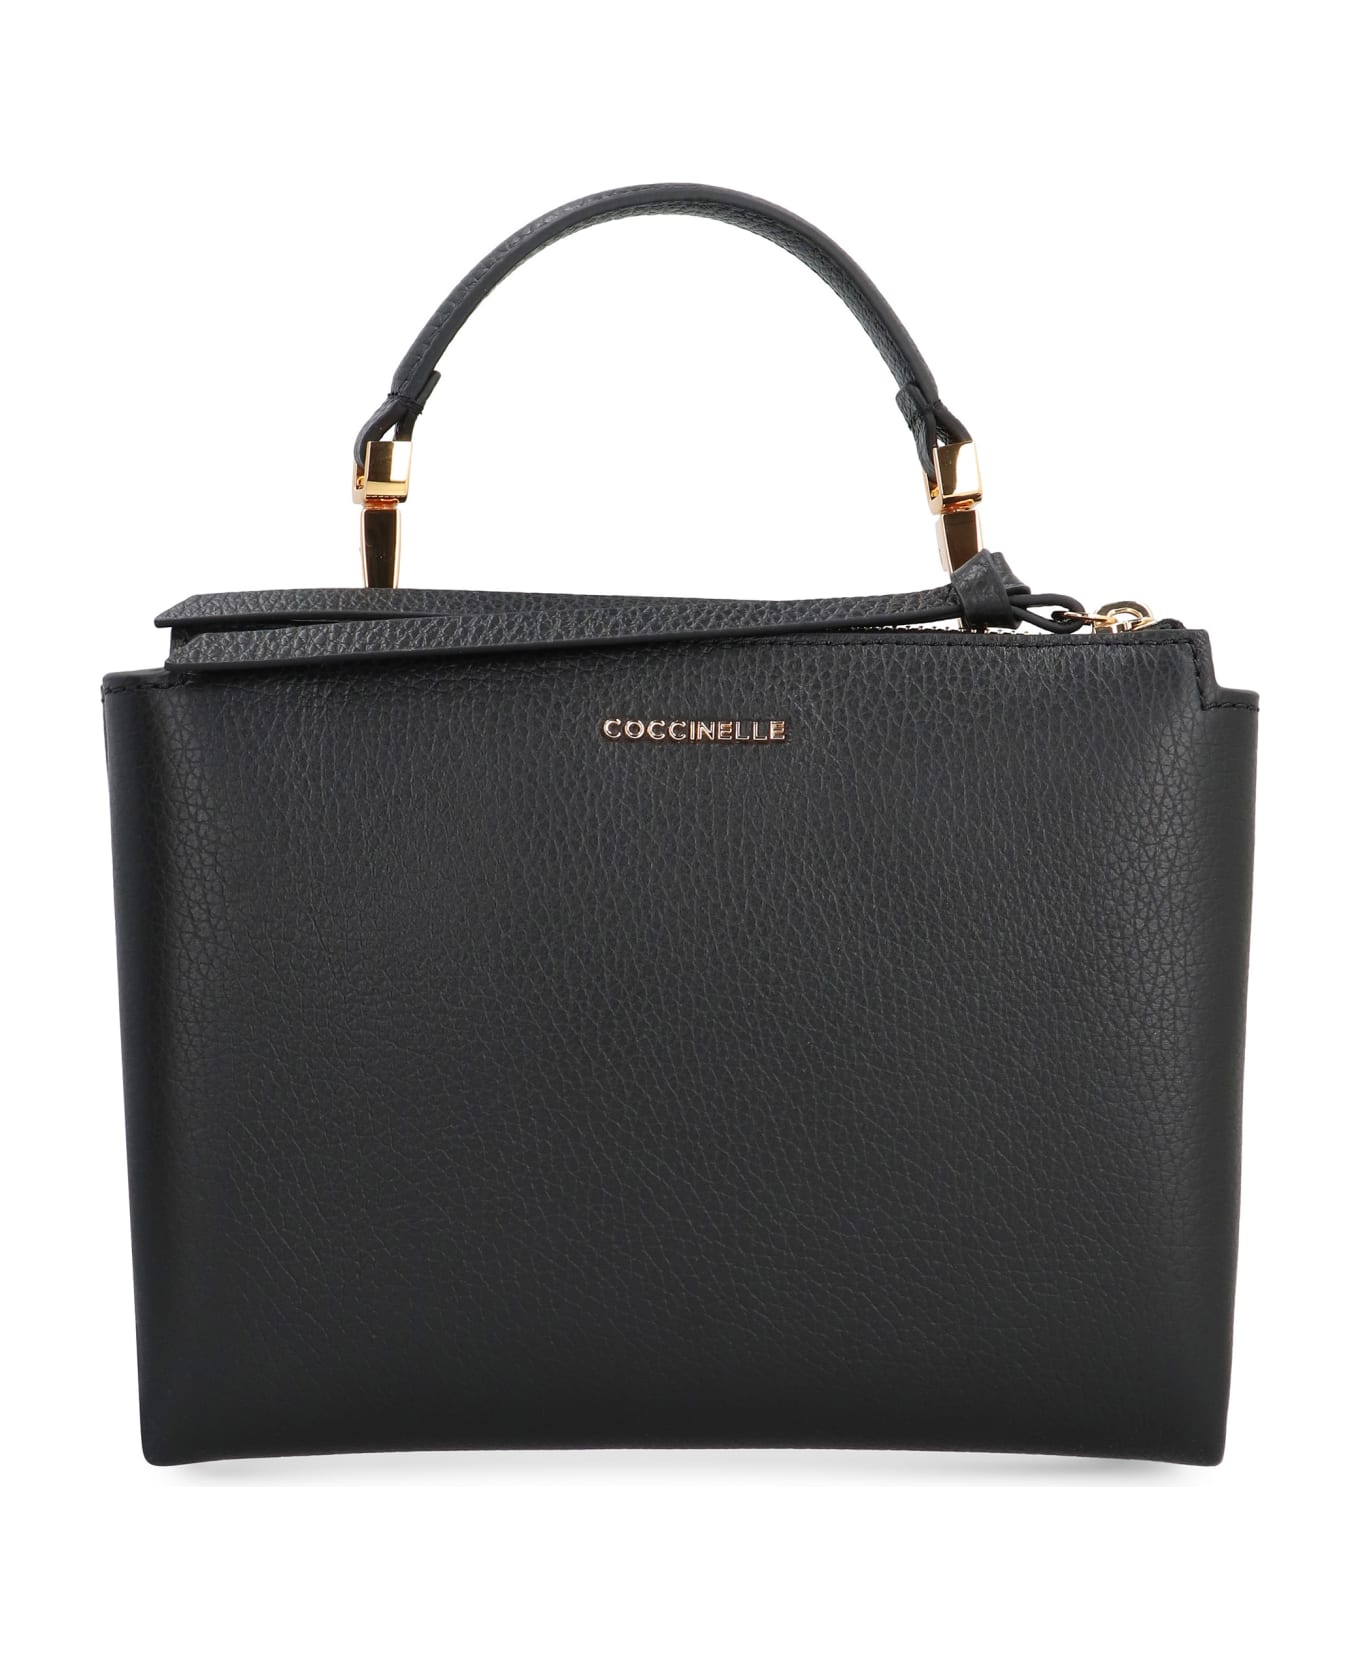 Coccinelle Arlettis Leather Handbag - black